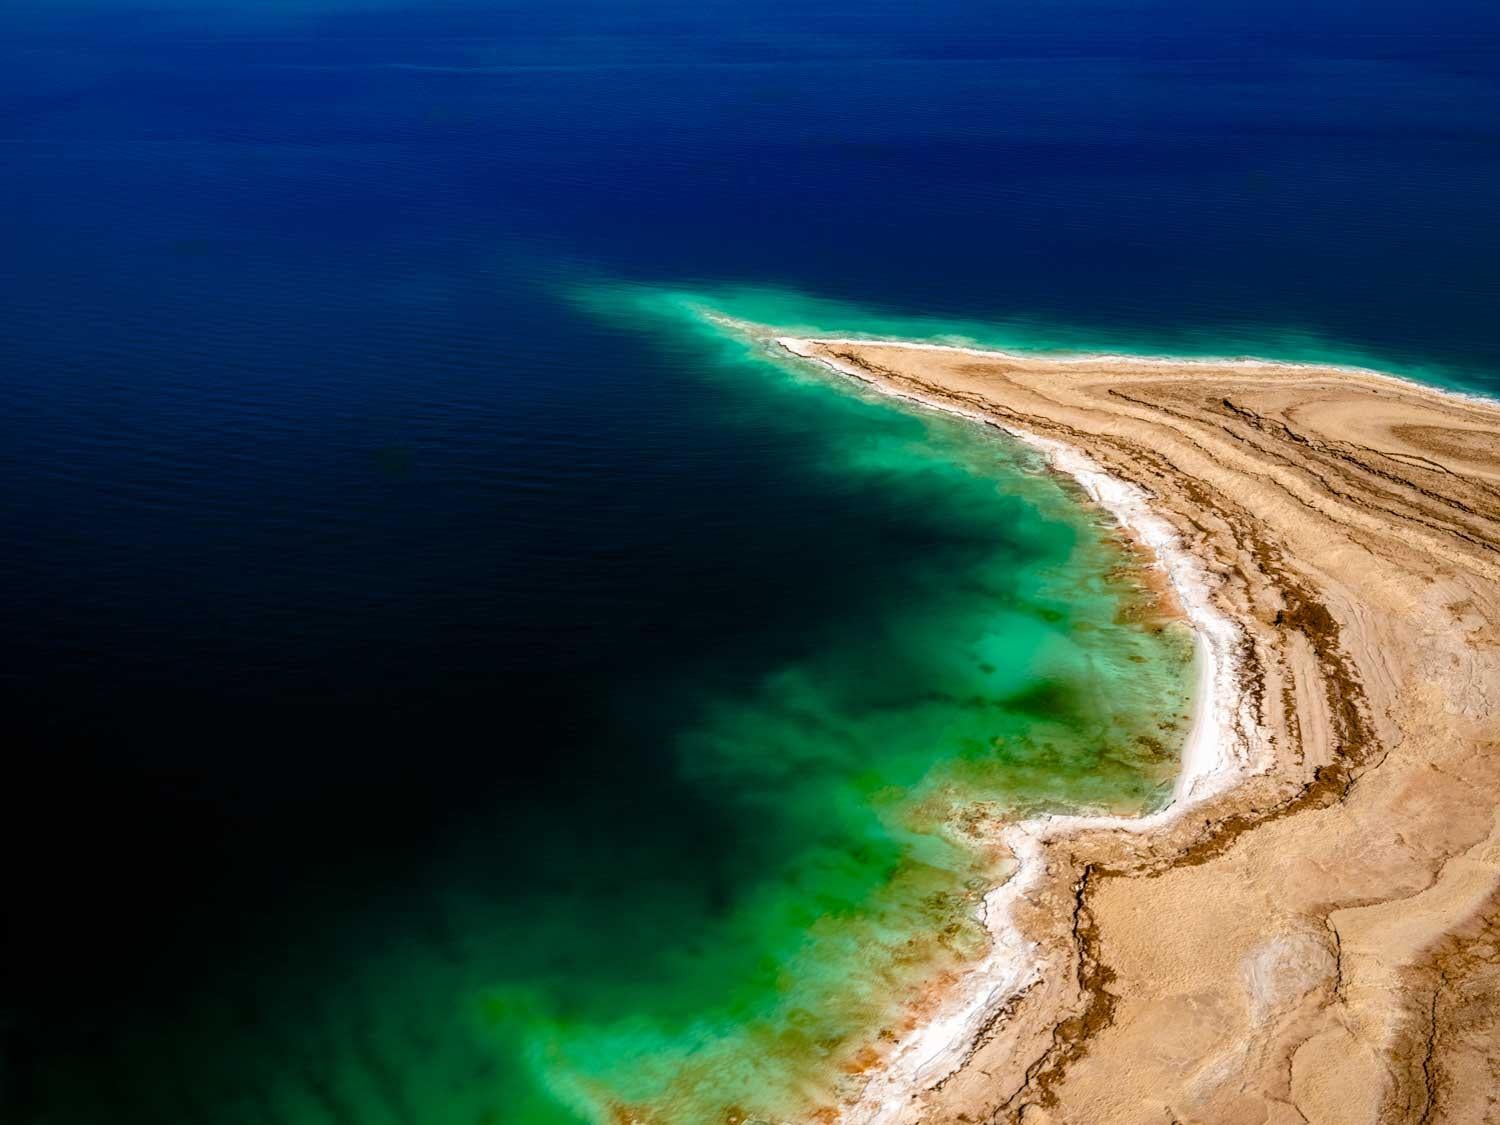 Depth Charge, Dead Sea, Israel, 2019